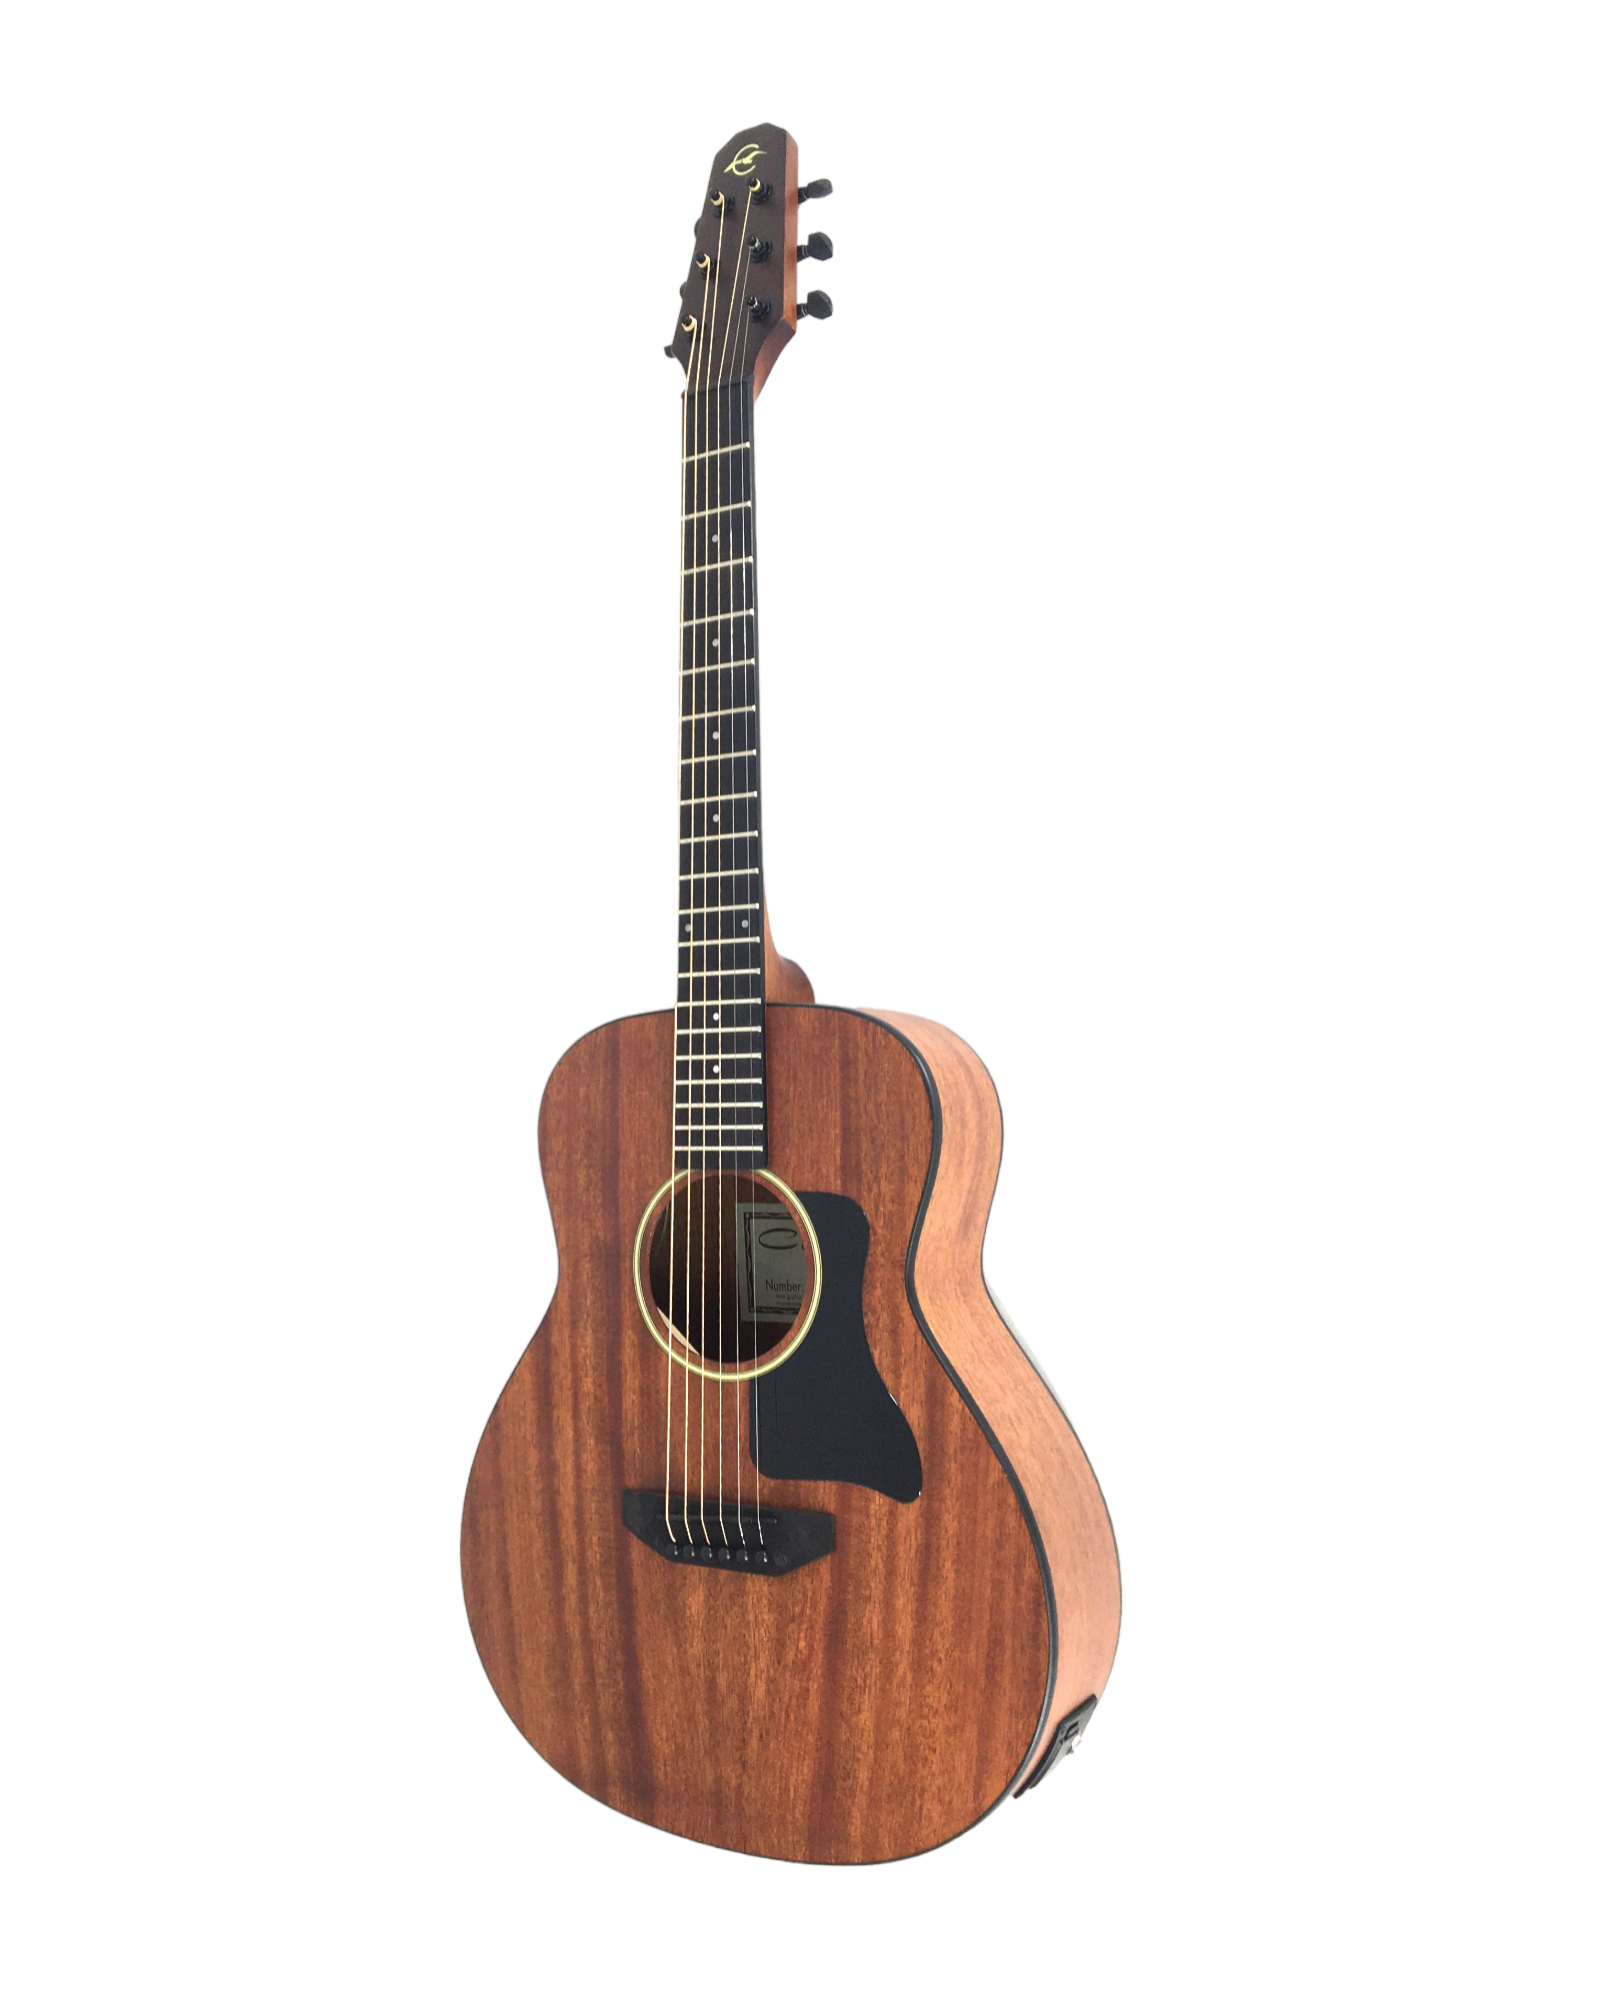 Caraya SAFAIR36EQ 36 Mahogany Travel Acoustic Guitar w/Built-in EQ+  Accessories